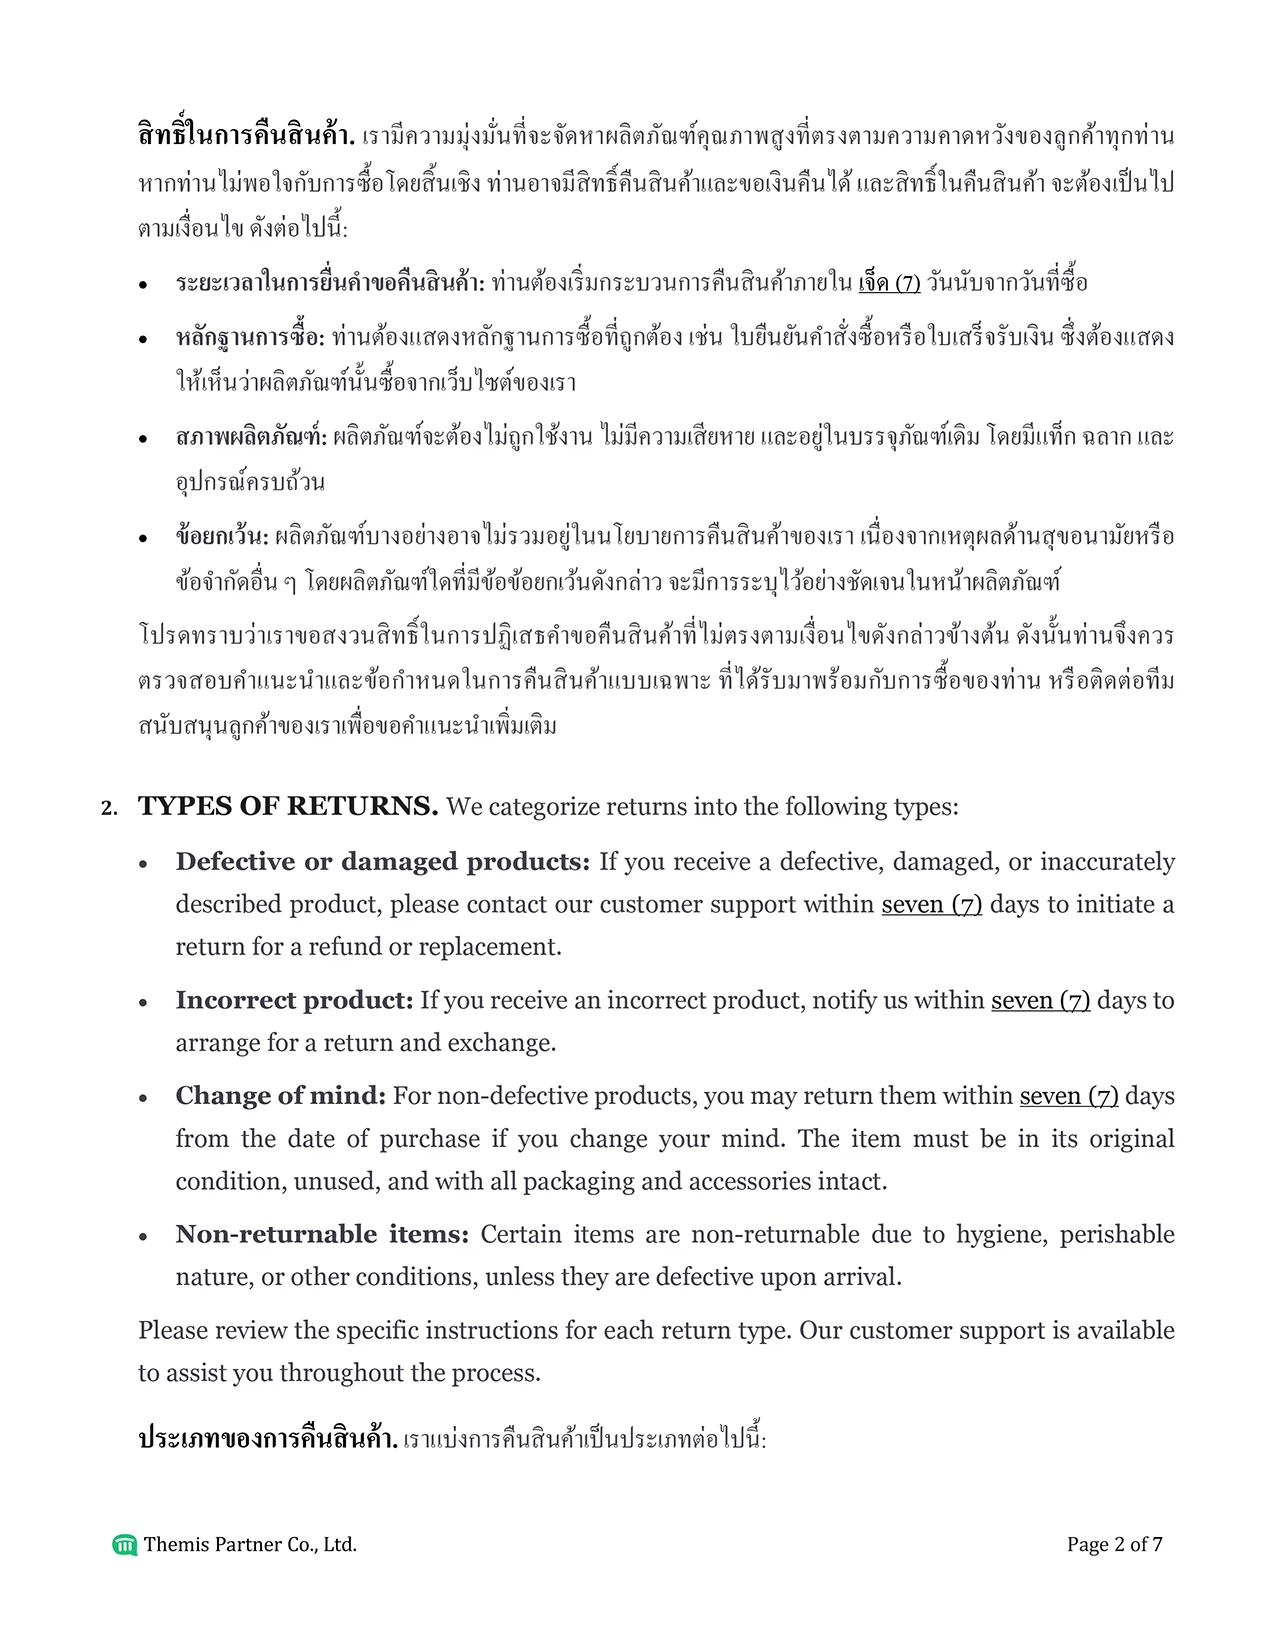 Return and refund policy Thailand 2